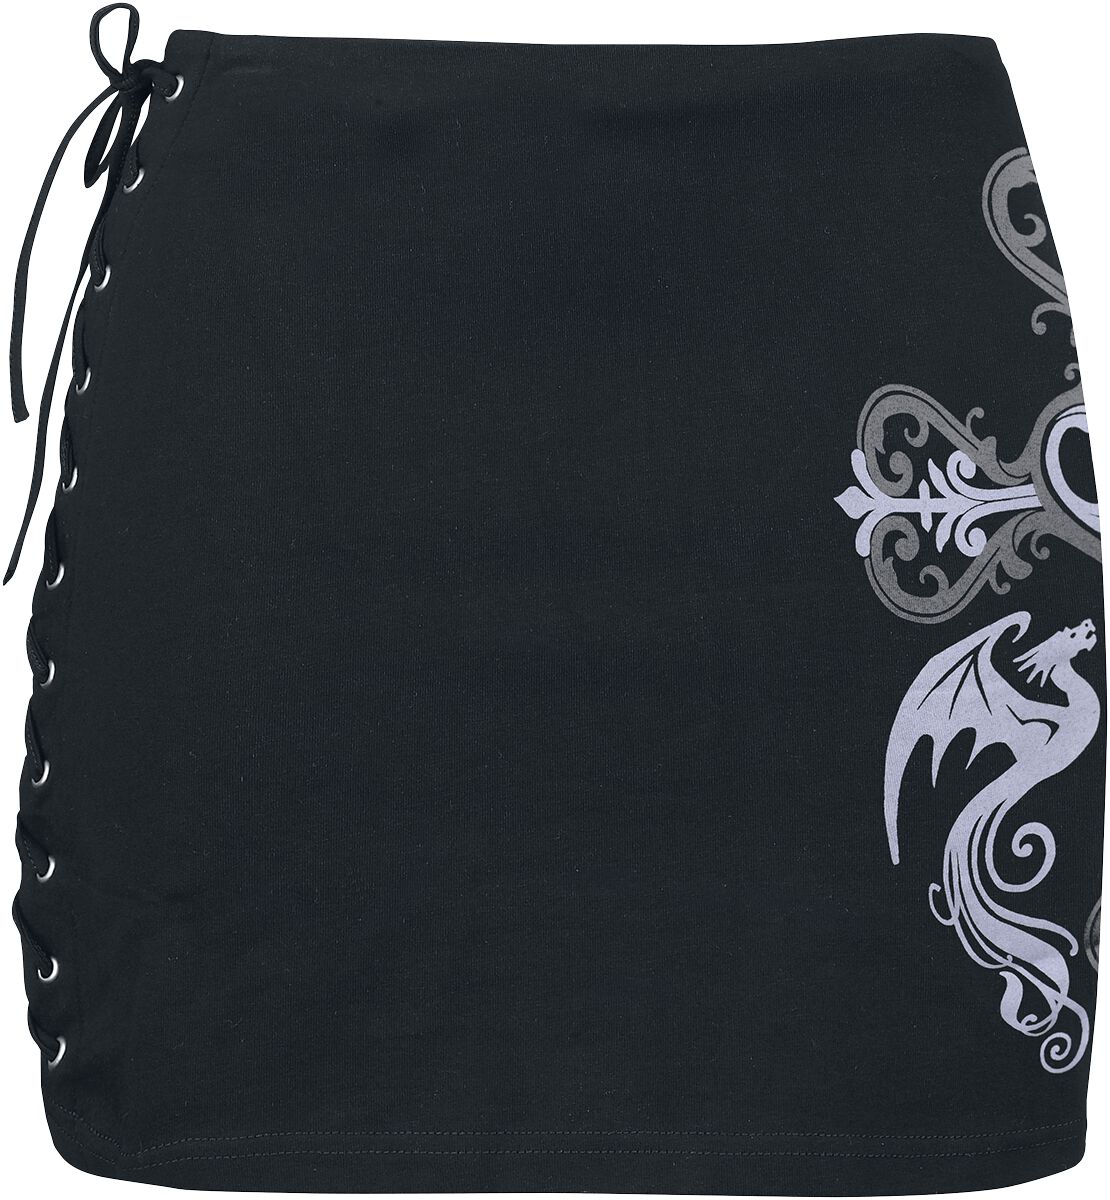 Gothicana by EMP - Gothic Kurzer Rock - Gothicana X Anne Stokes - Skirt With Lacing And Lace - XS bis XXL - für Damen - Größe XXL - schwarz